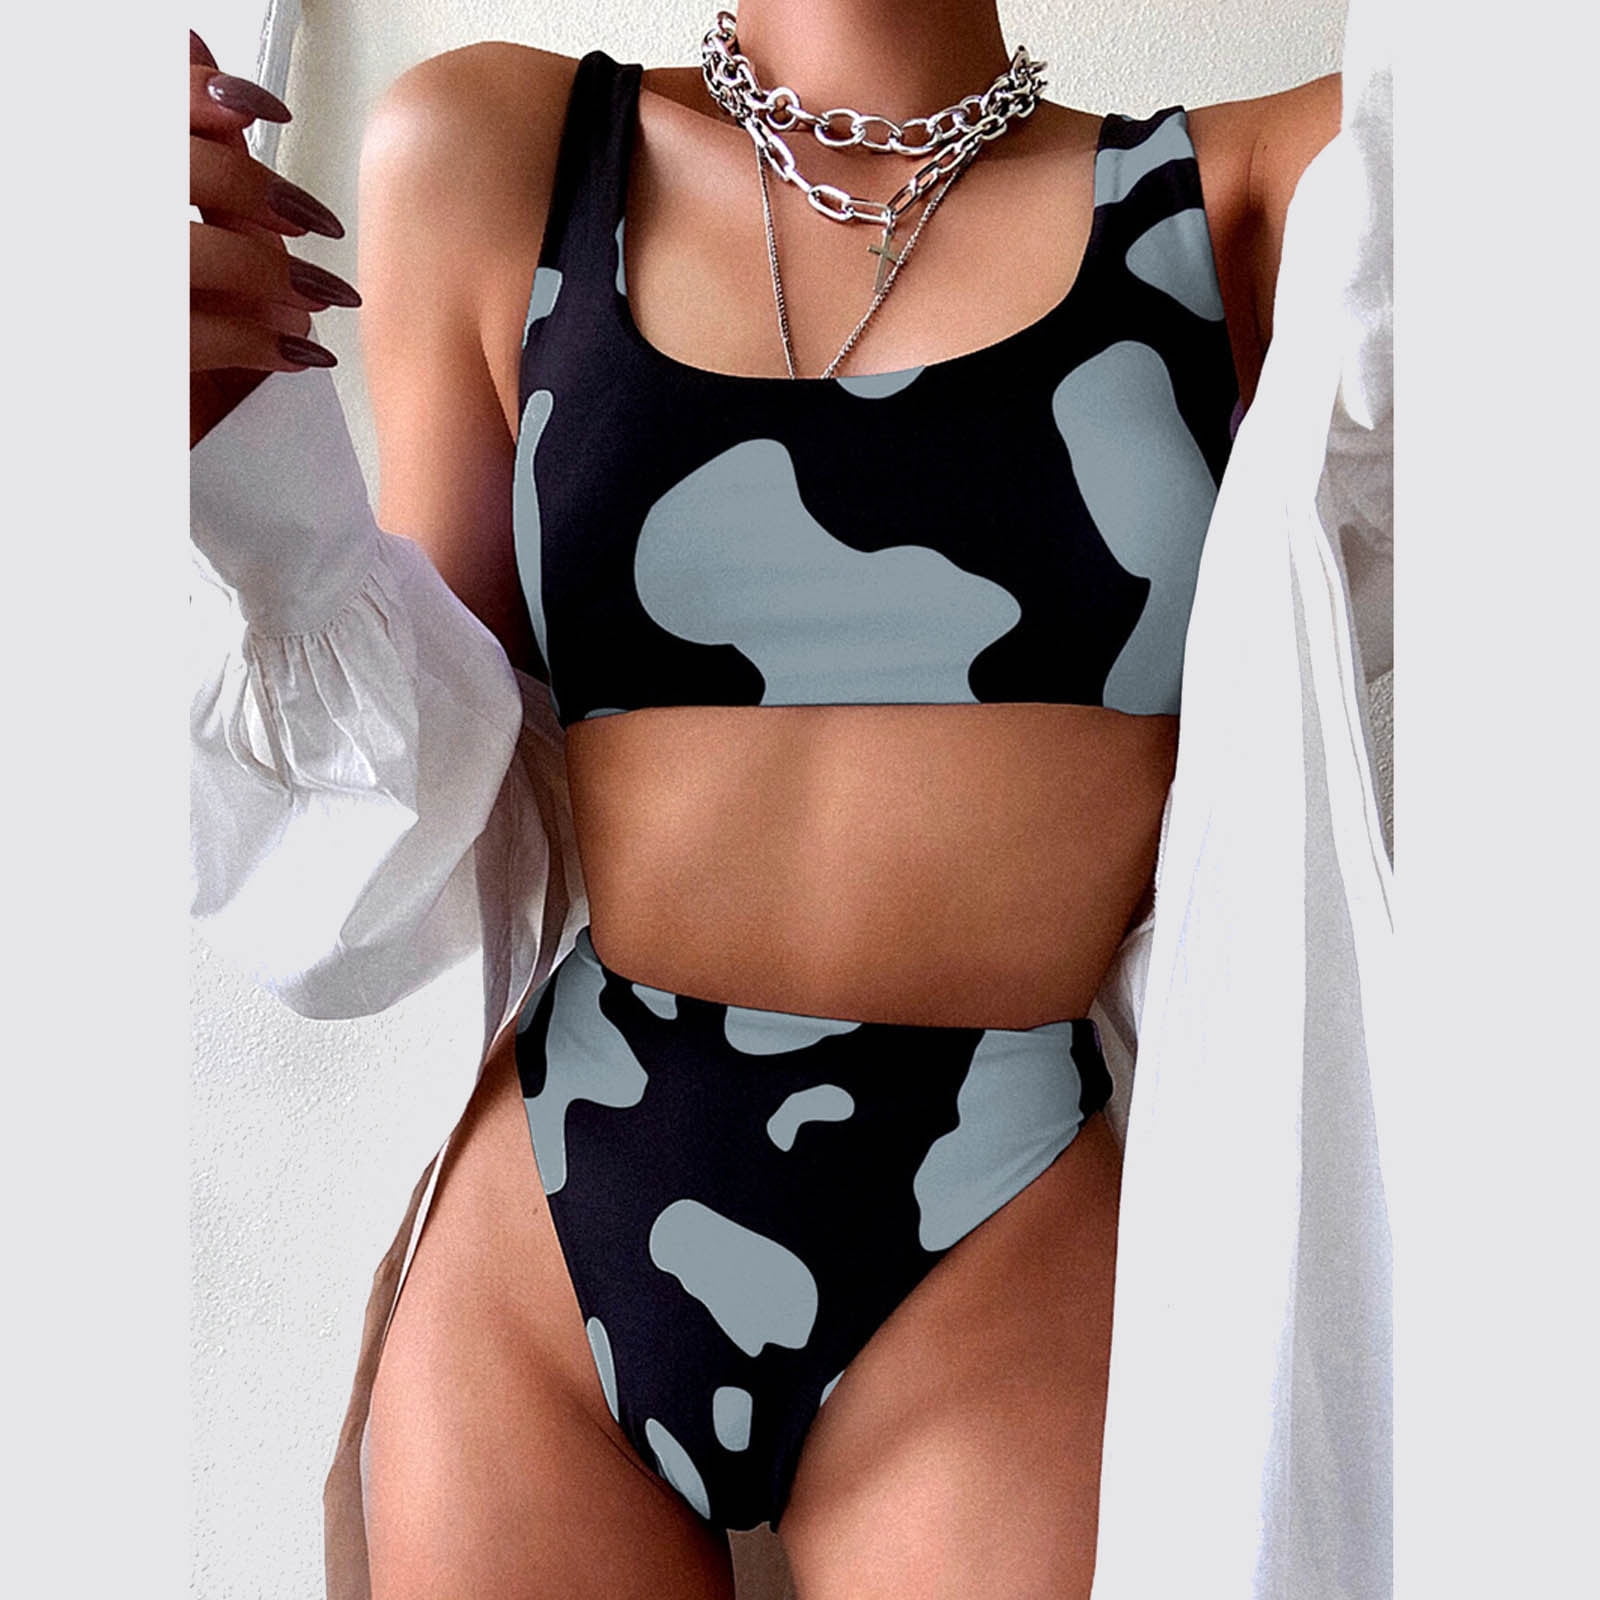 Finelylove 2 Piece Swimsuit For Women Padded Sport Bra Style